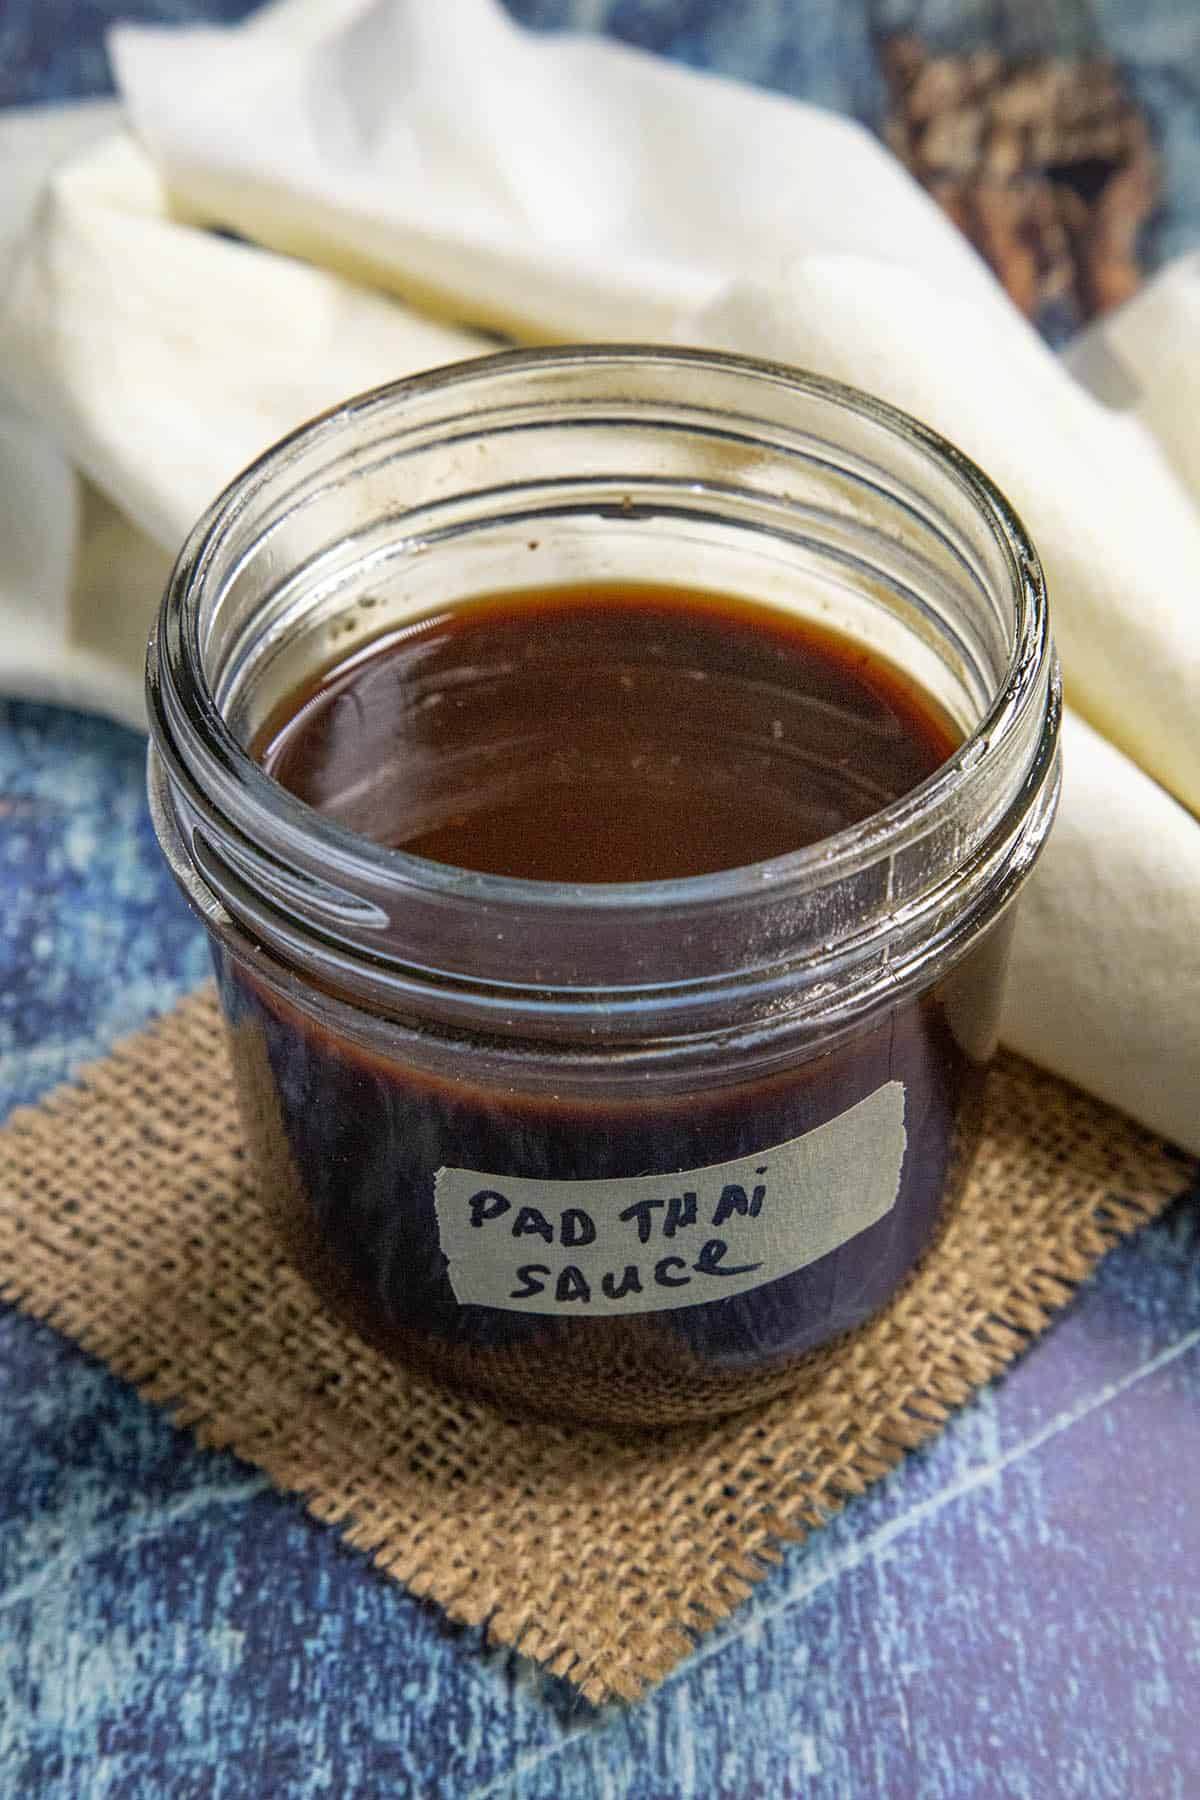 Homemade Pad Thai Sauce in a jar, ready for making Pad Thai